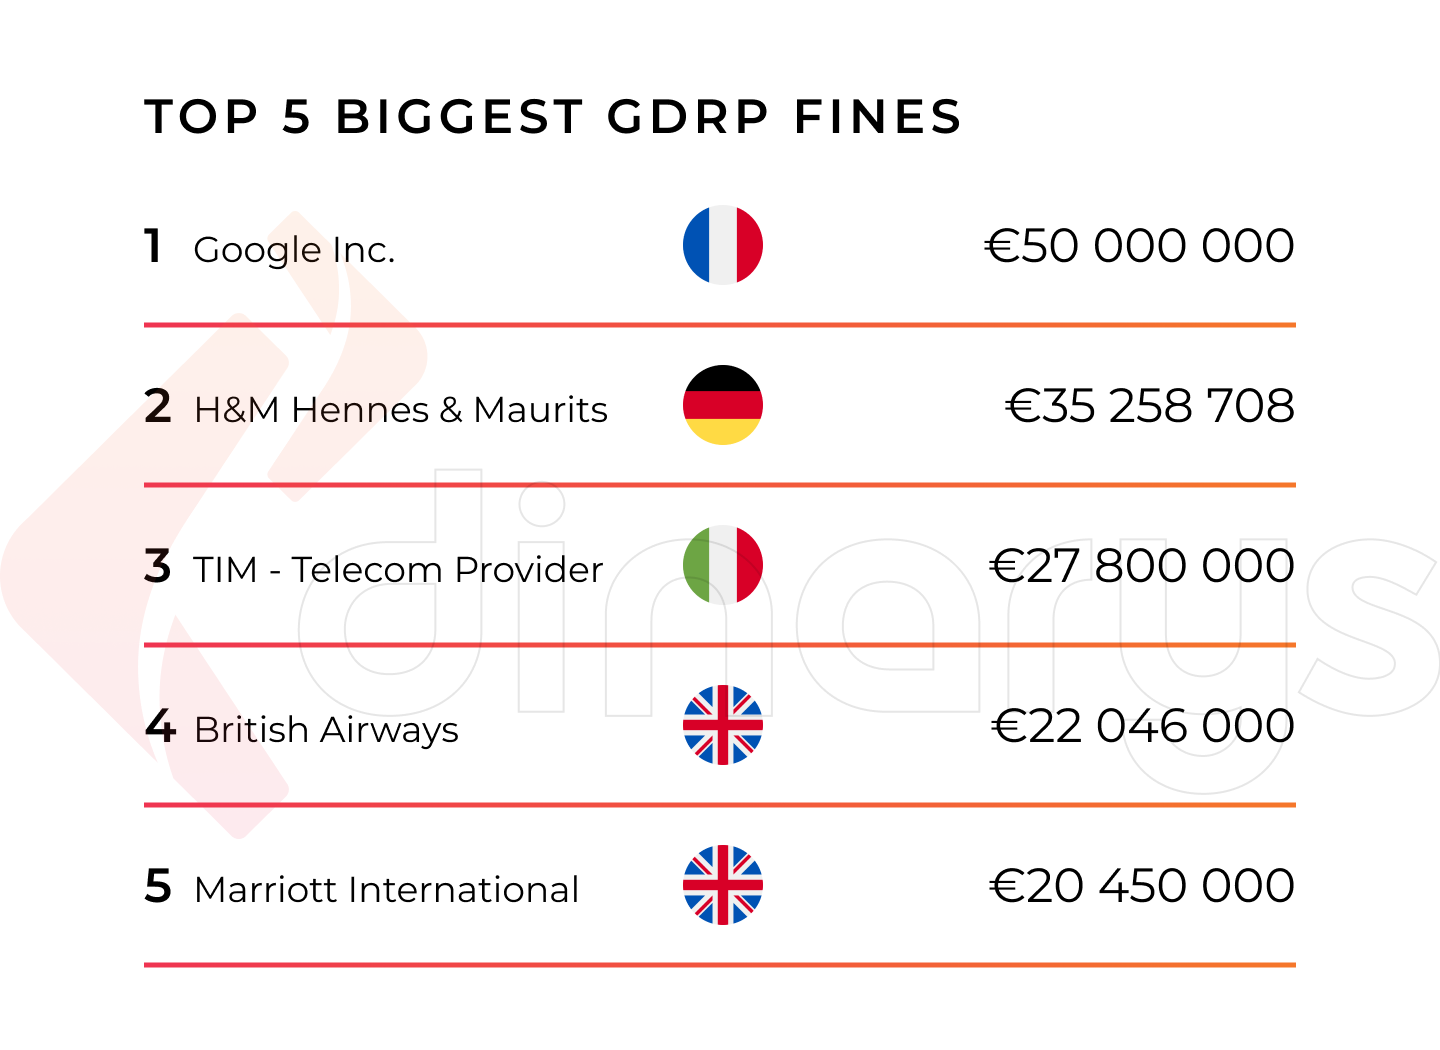 Top 5 largest GDPR fines